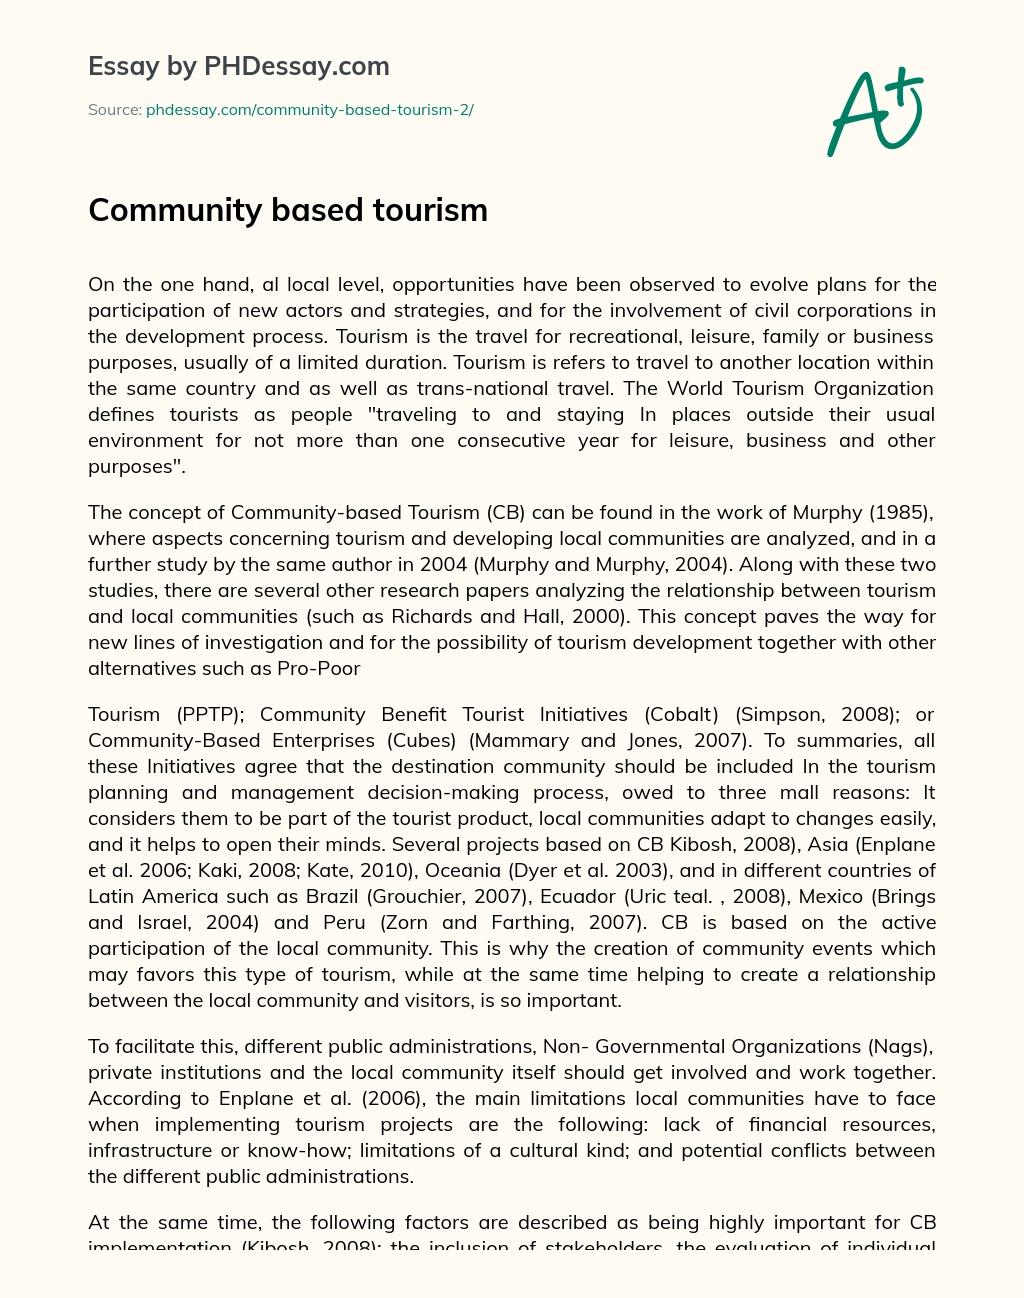 Community based tourism essay